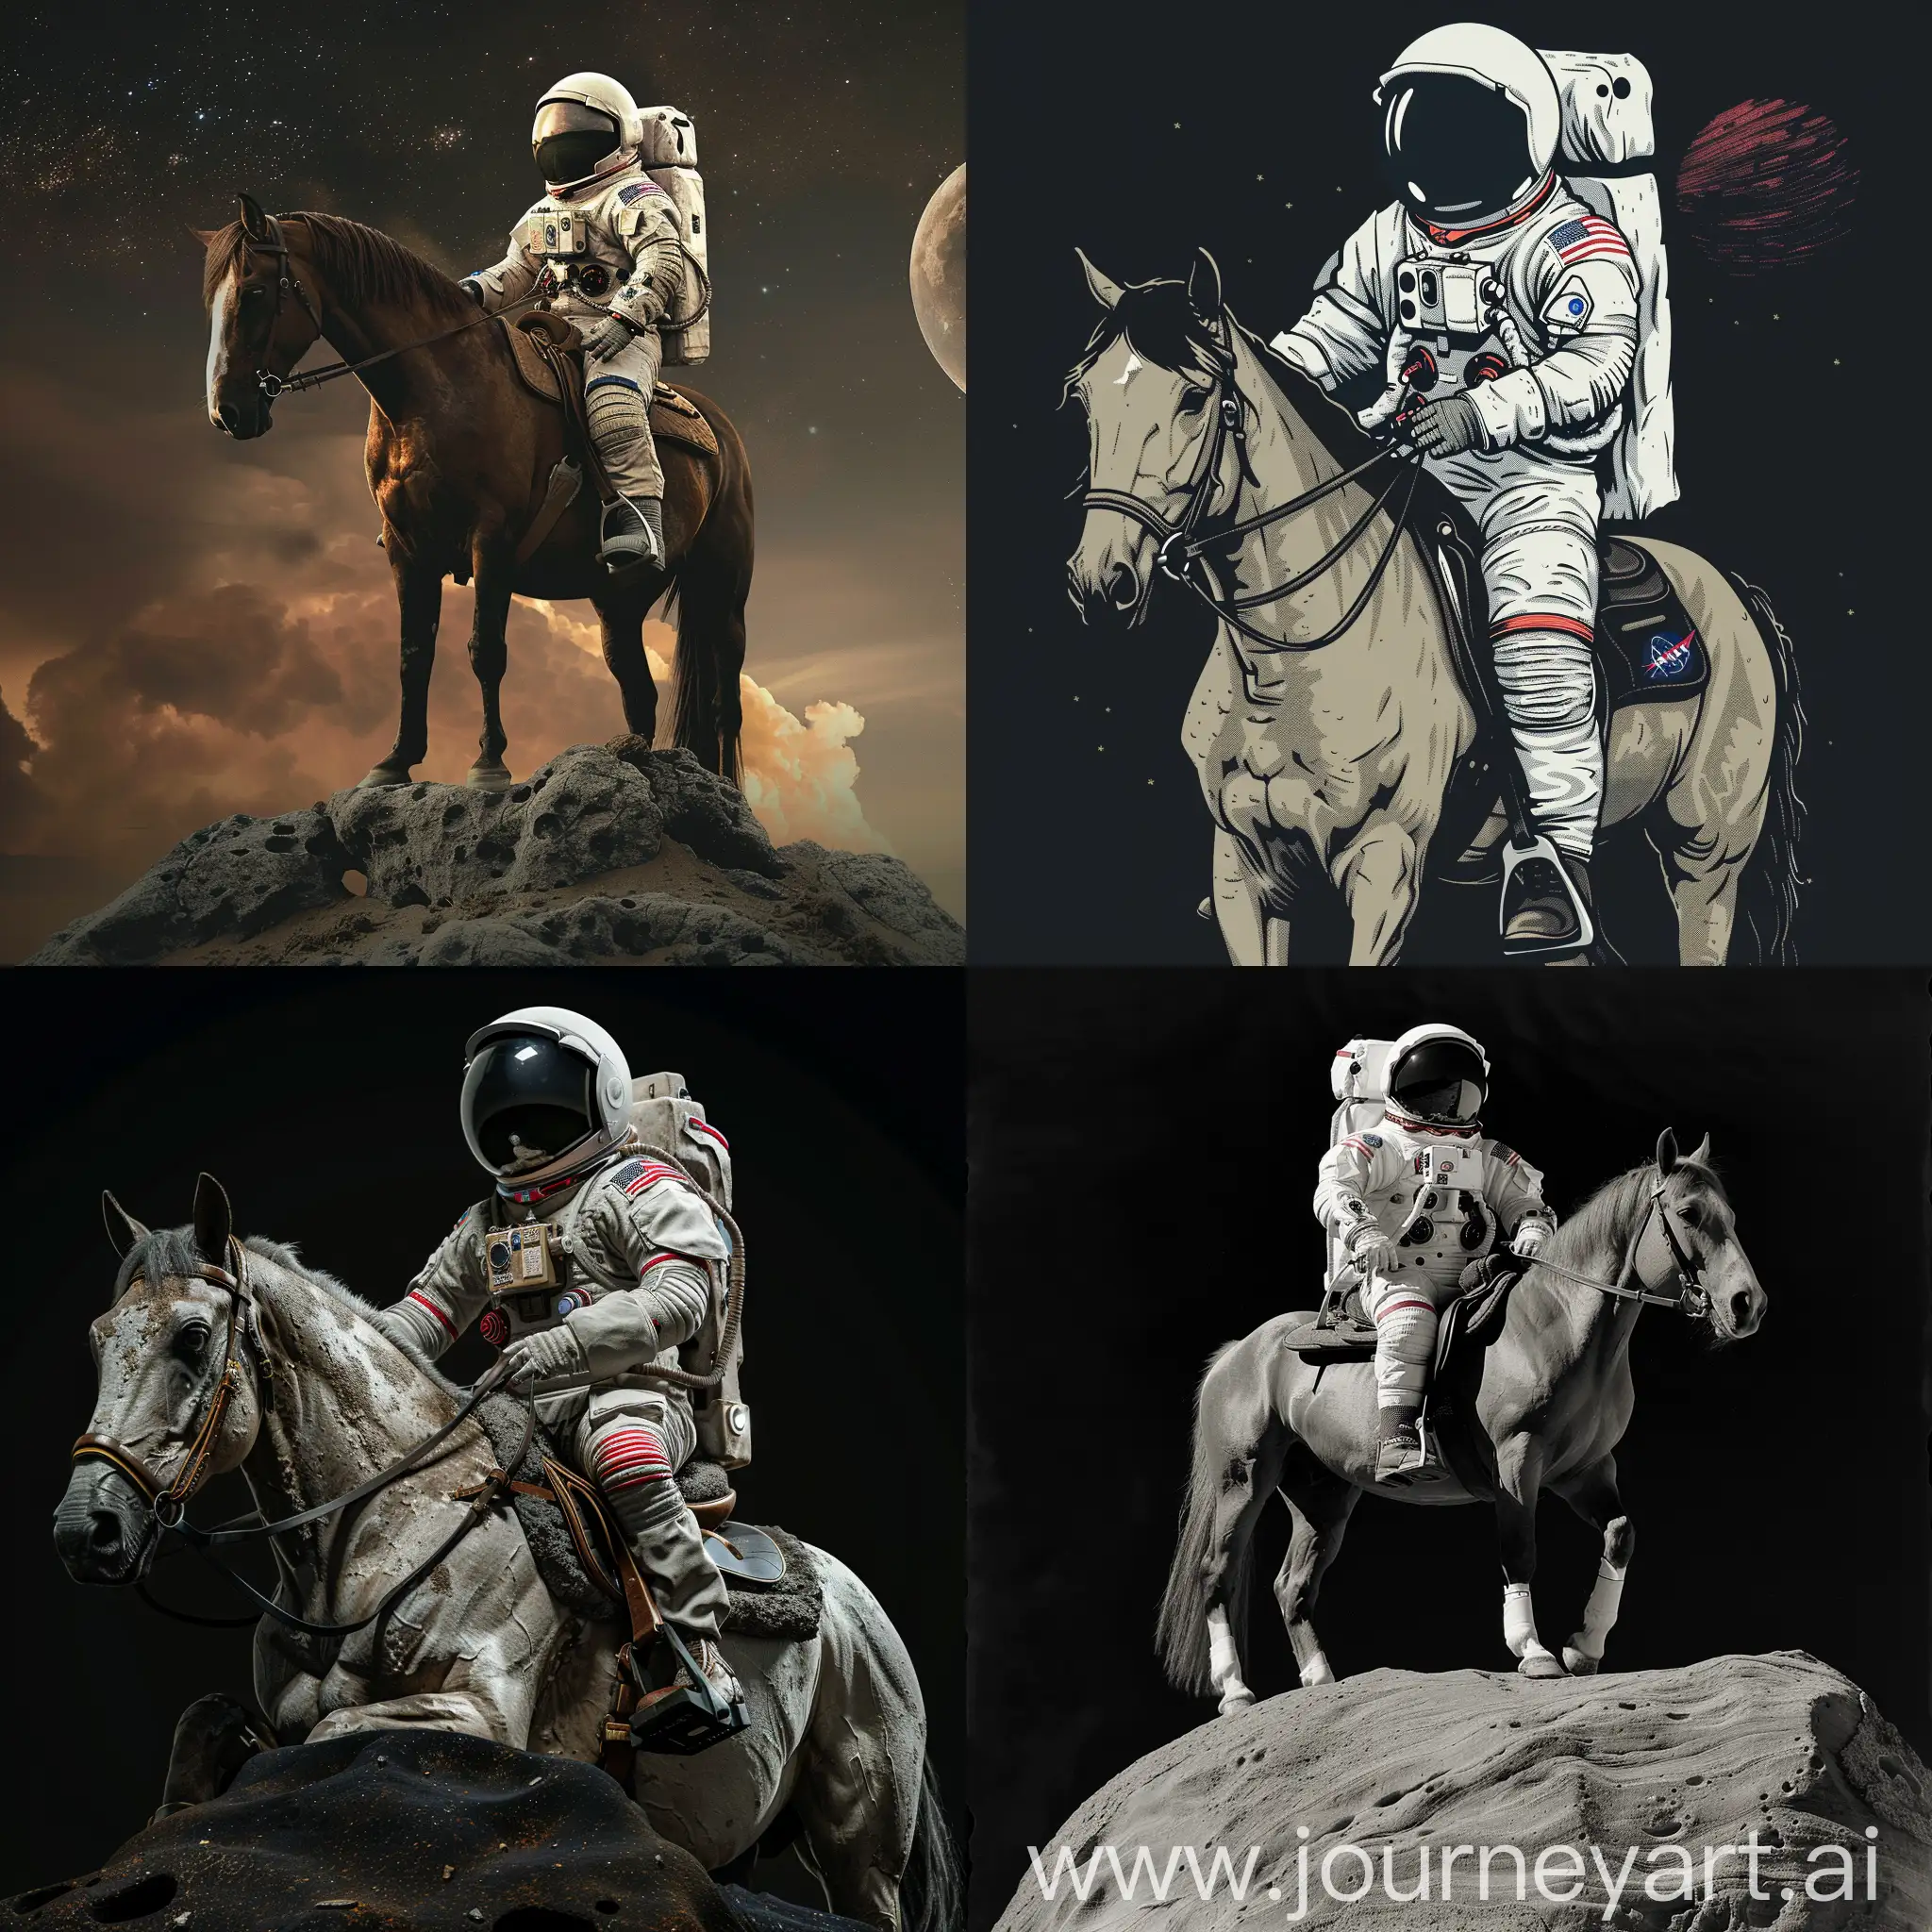 Astronaut-Riding-Horse-in-Celestial-Exploration-Adventure